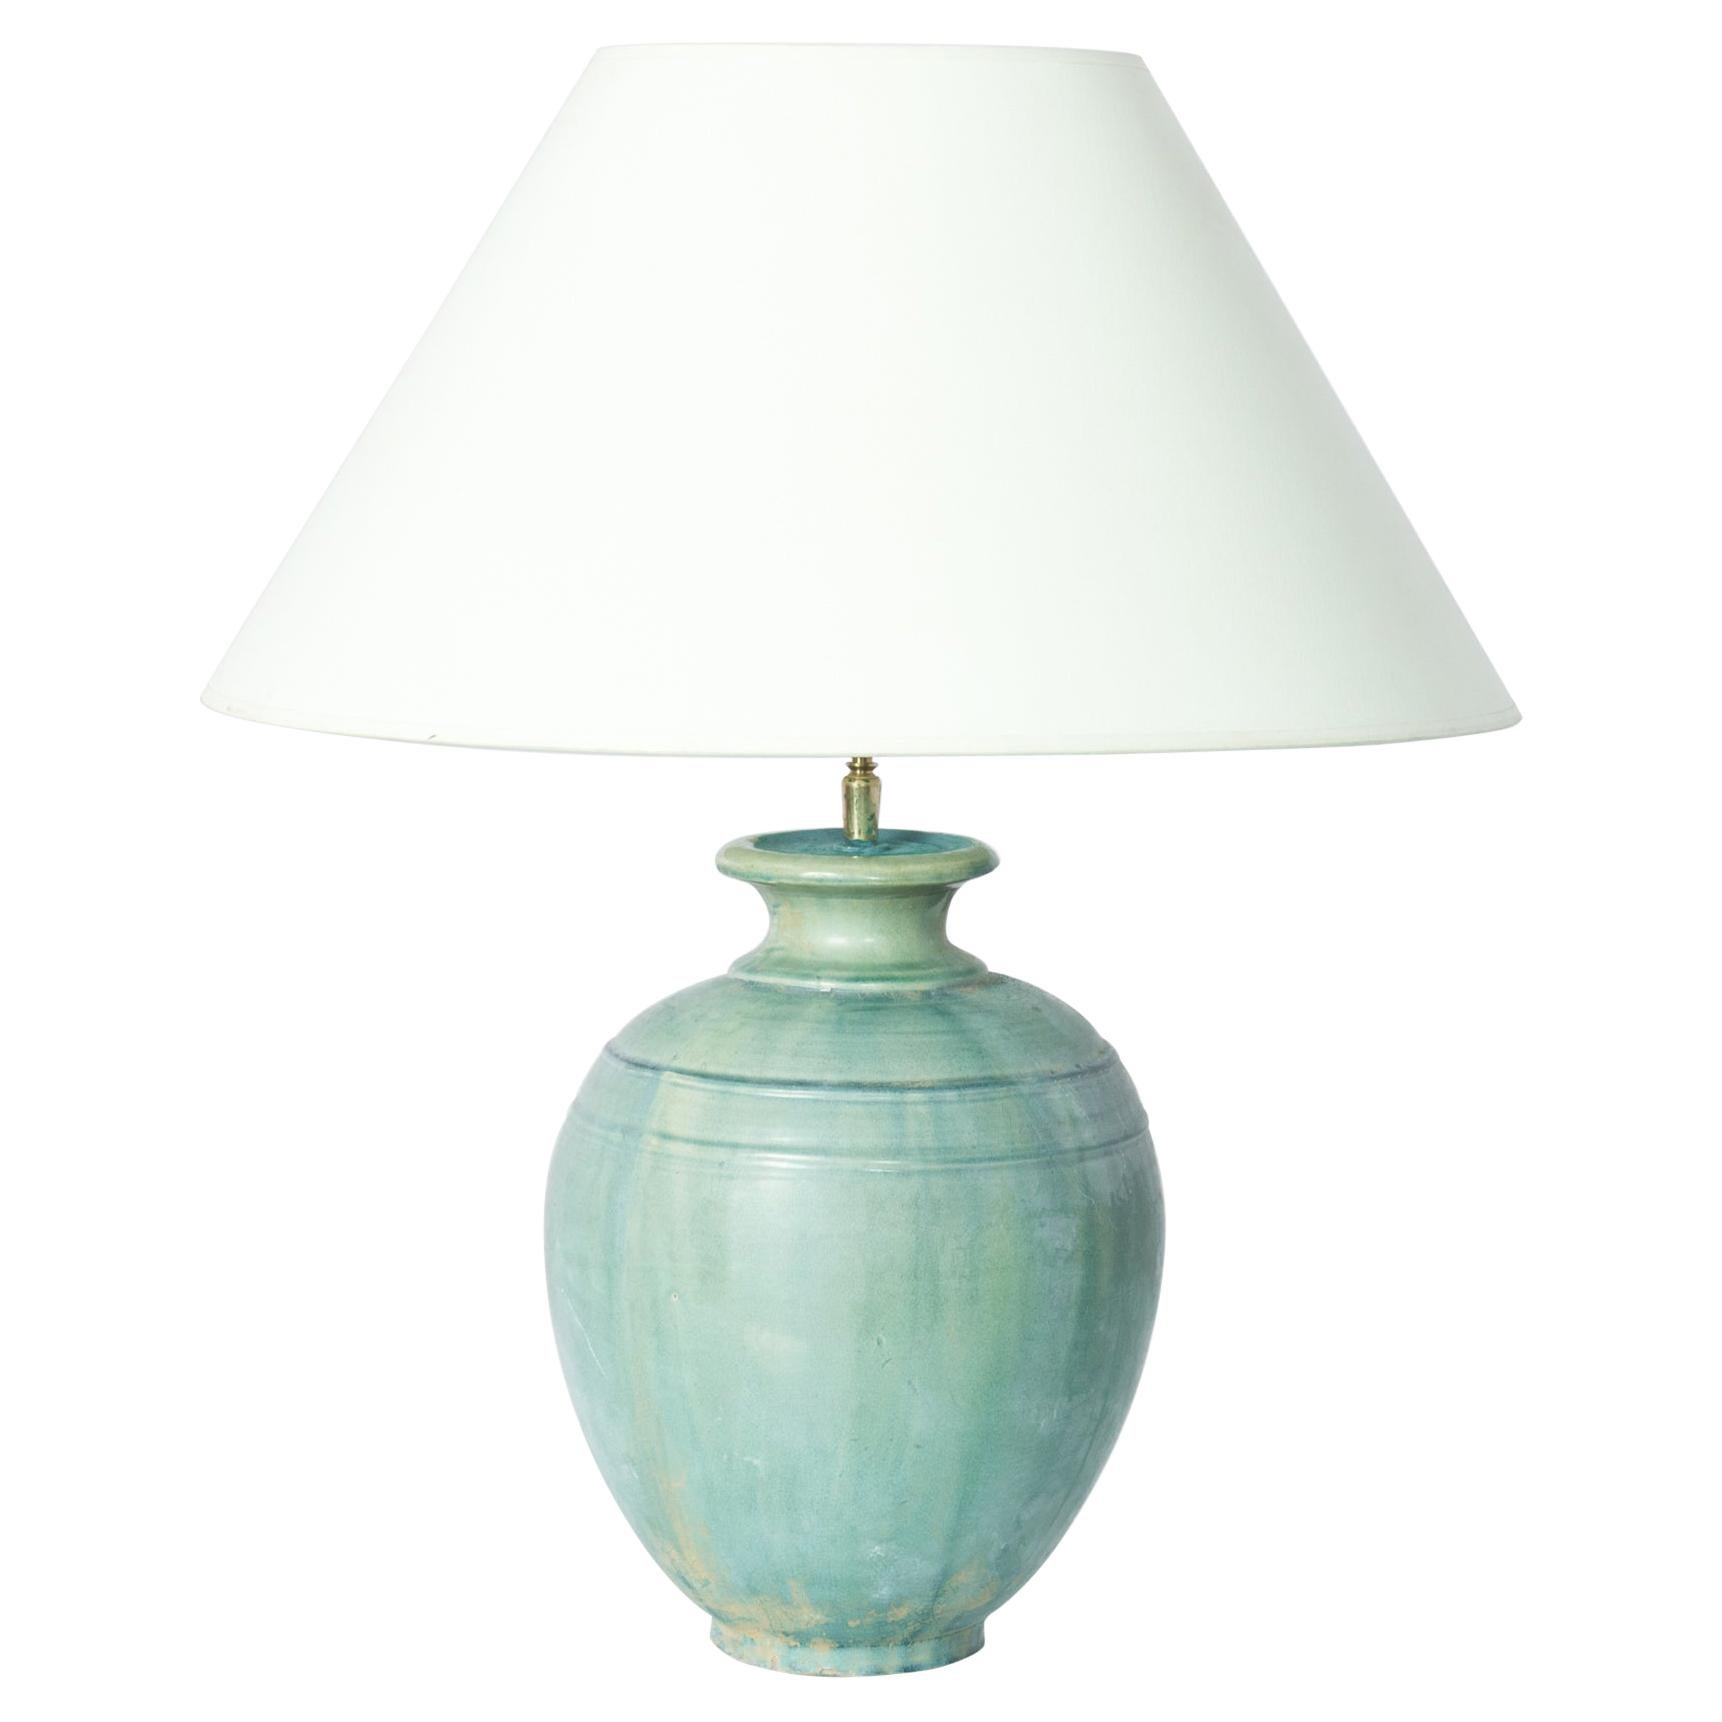 Antique Chinese Celadon Vase Table Lamp